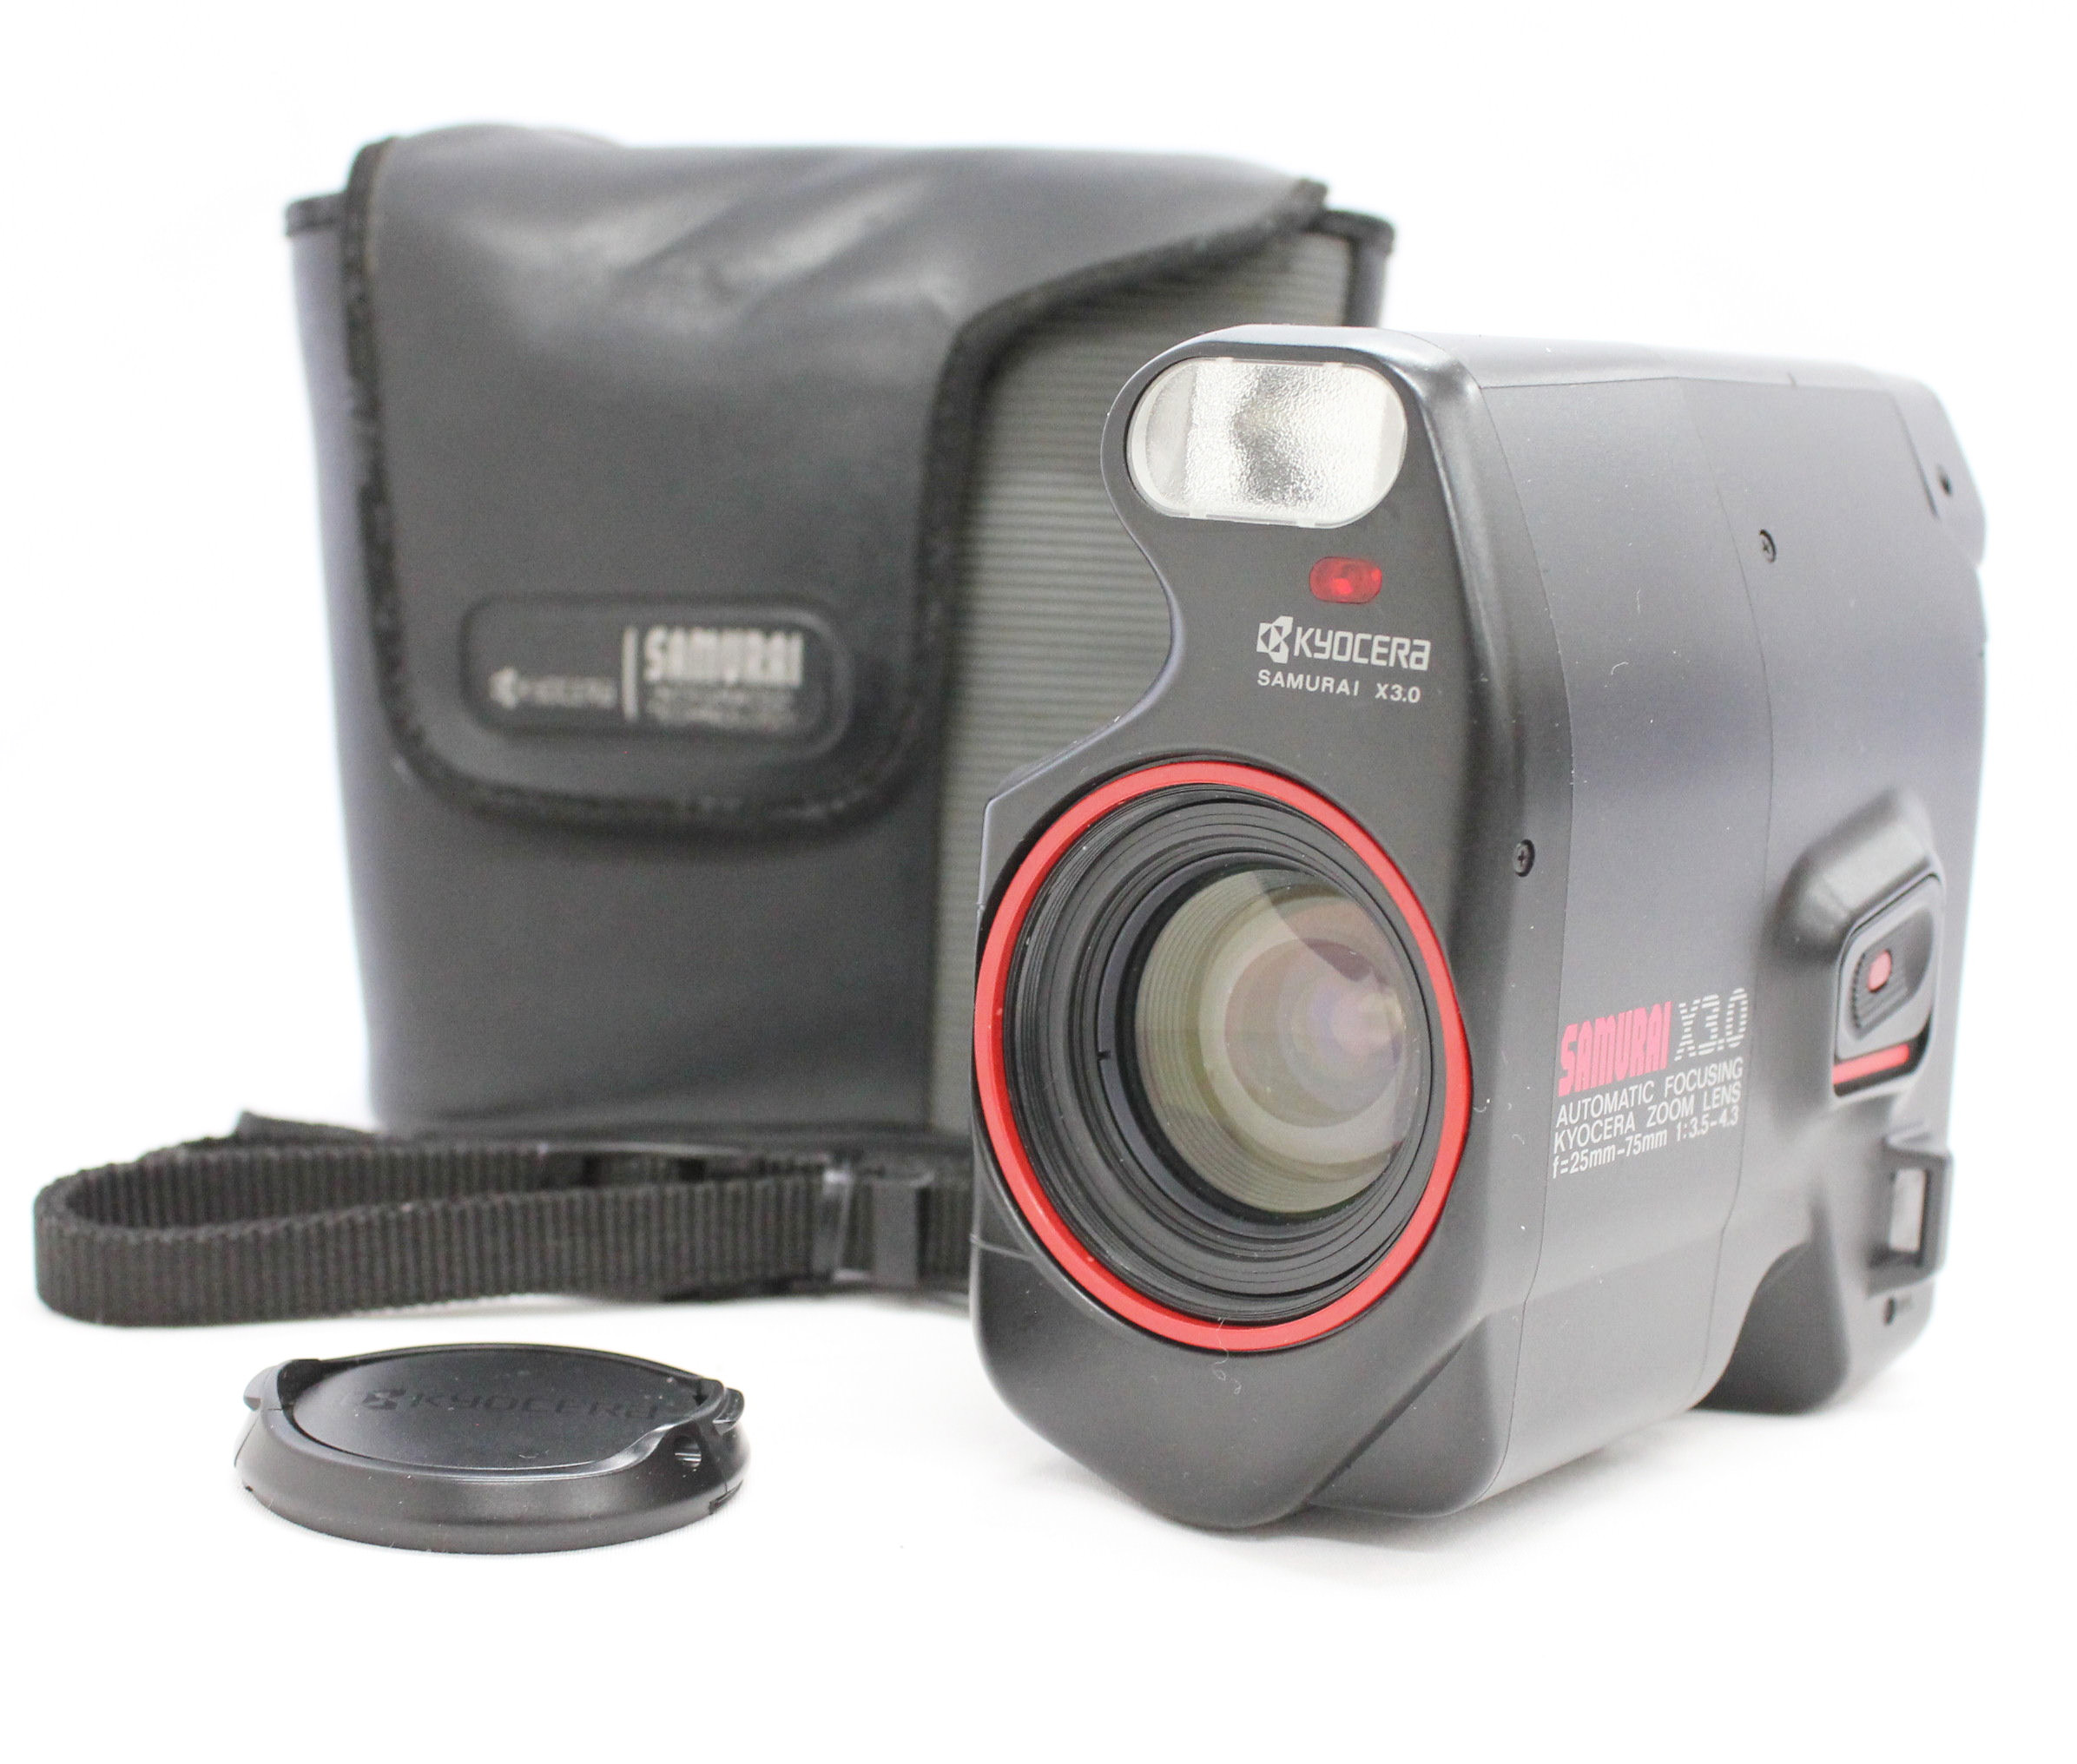 Japan Used Camera Shop | [Excellent+++++] Kyocera Samurai X3.0 35mm Half Frame Camera from Japan